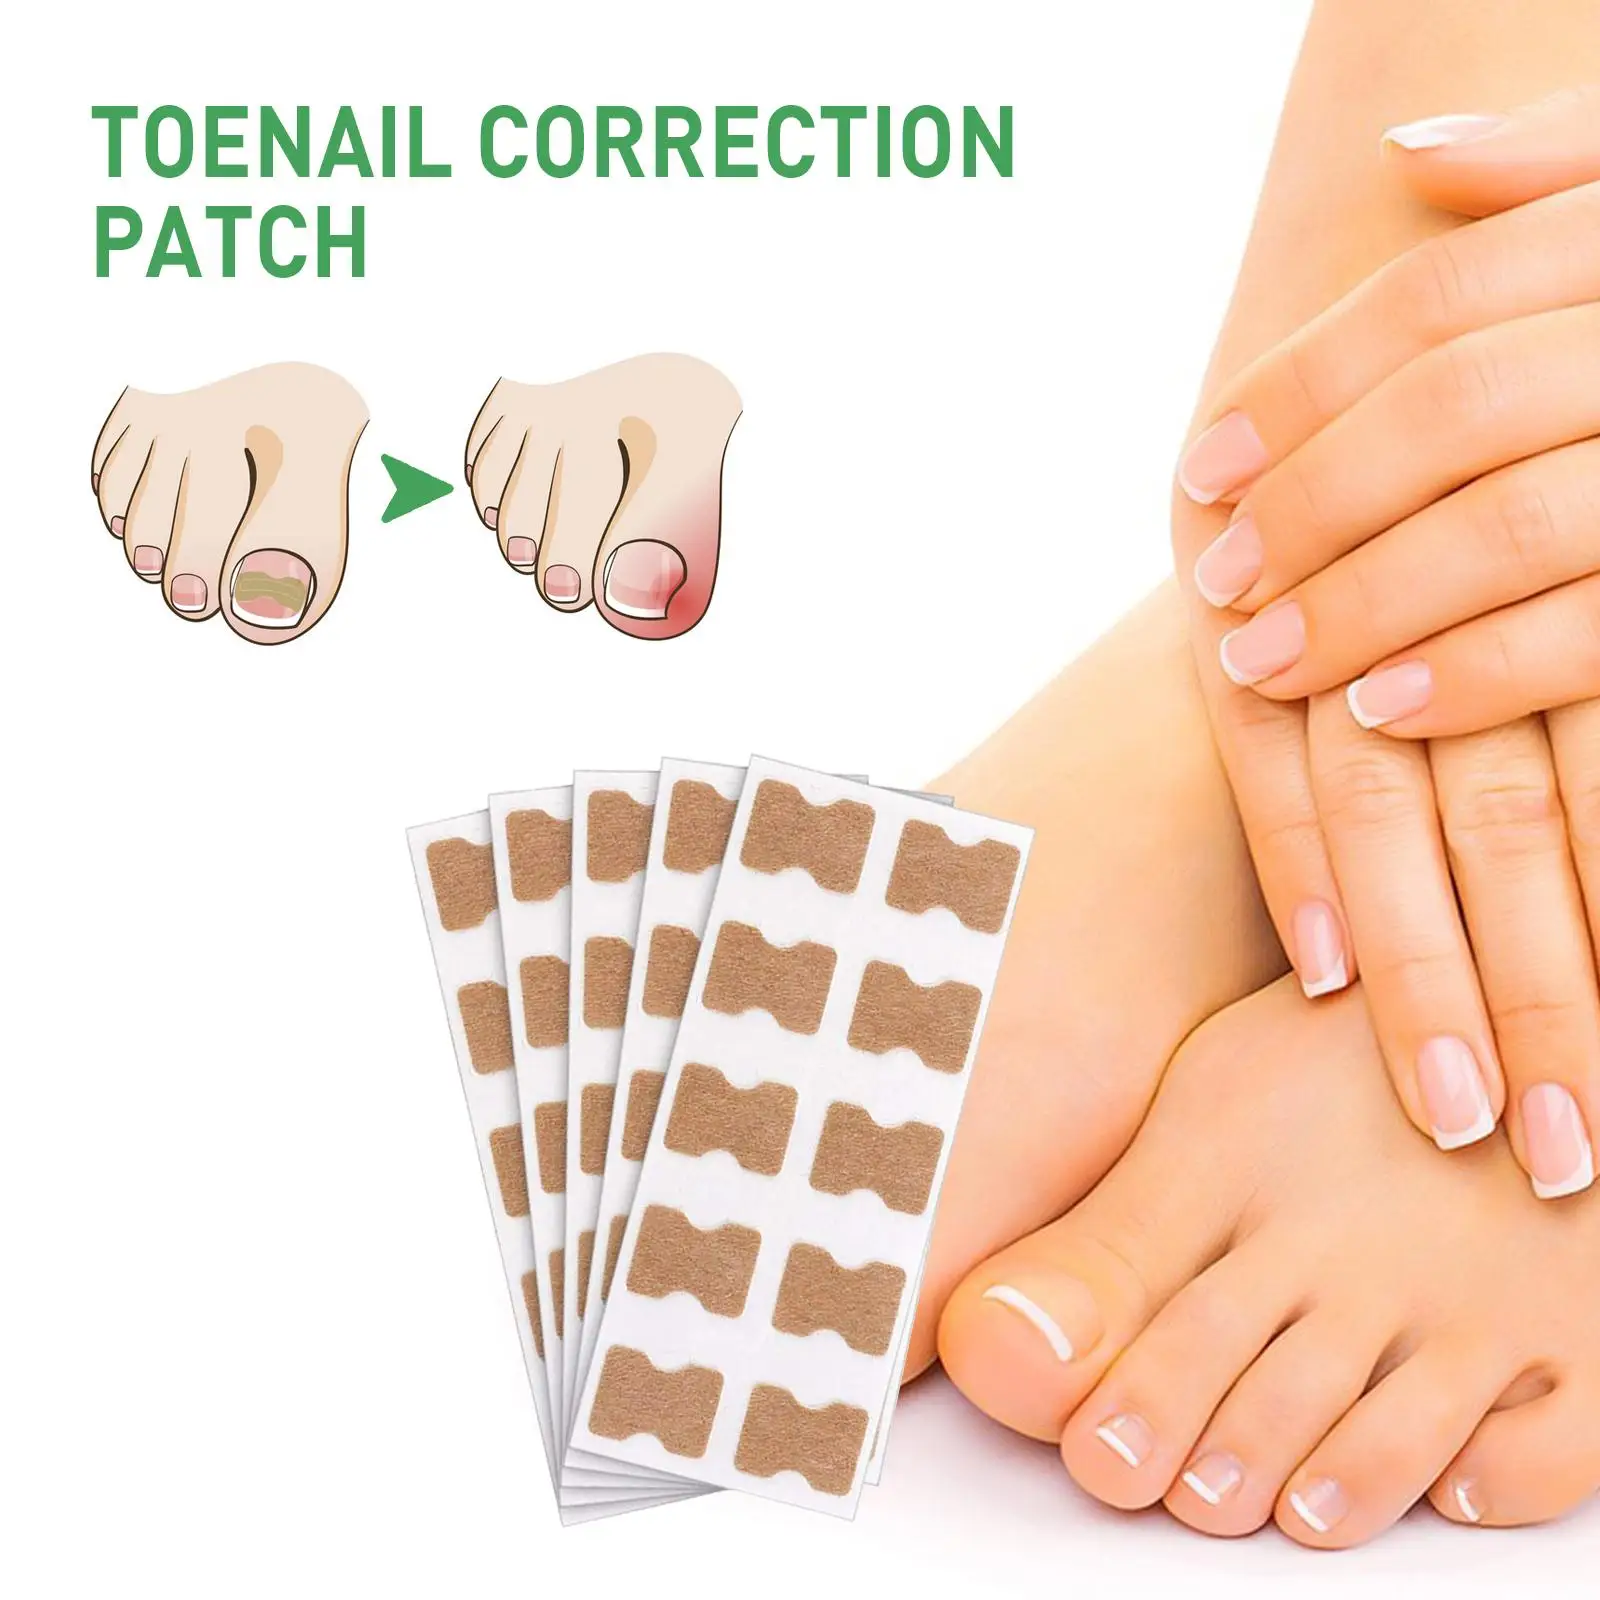 50Pcs Elastic Ingrown Toenail Stick Patch Foot Care Adhesive Toe Nail Treatment Corrector Sticker for Men Women